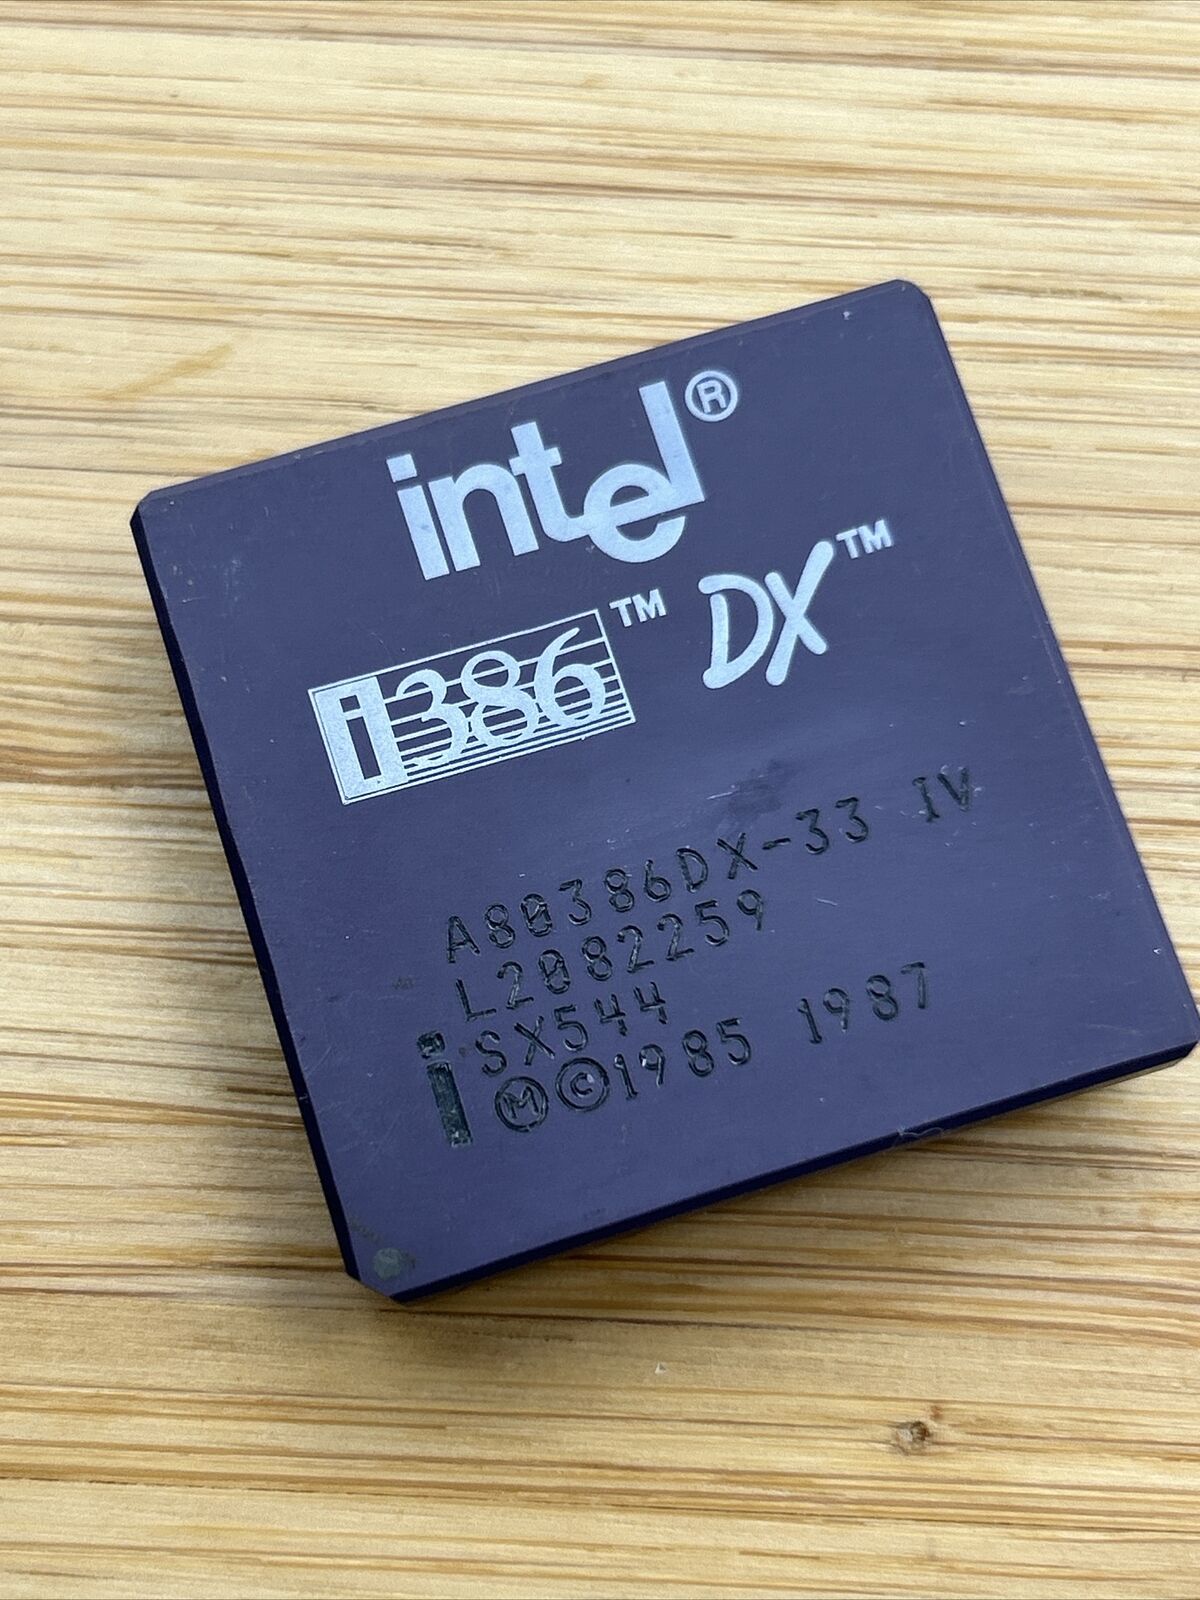 Intel 386DX-33Mhz Gold PGA Processor SX544 SX219 SX366 CPU i386 80386 386DX 386